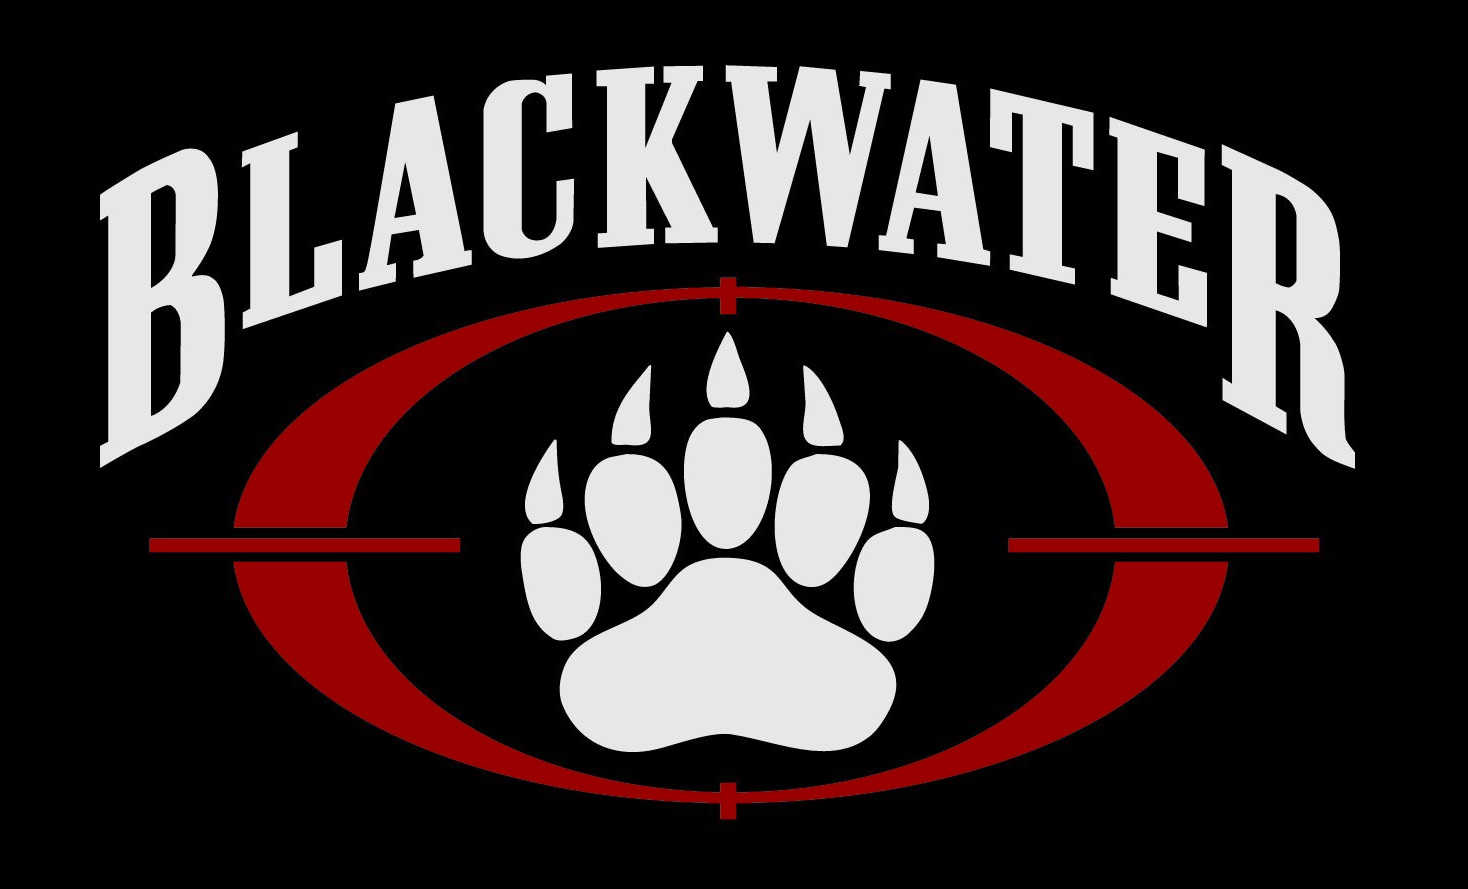 Blackwater news